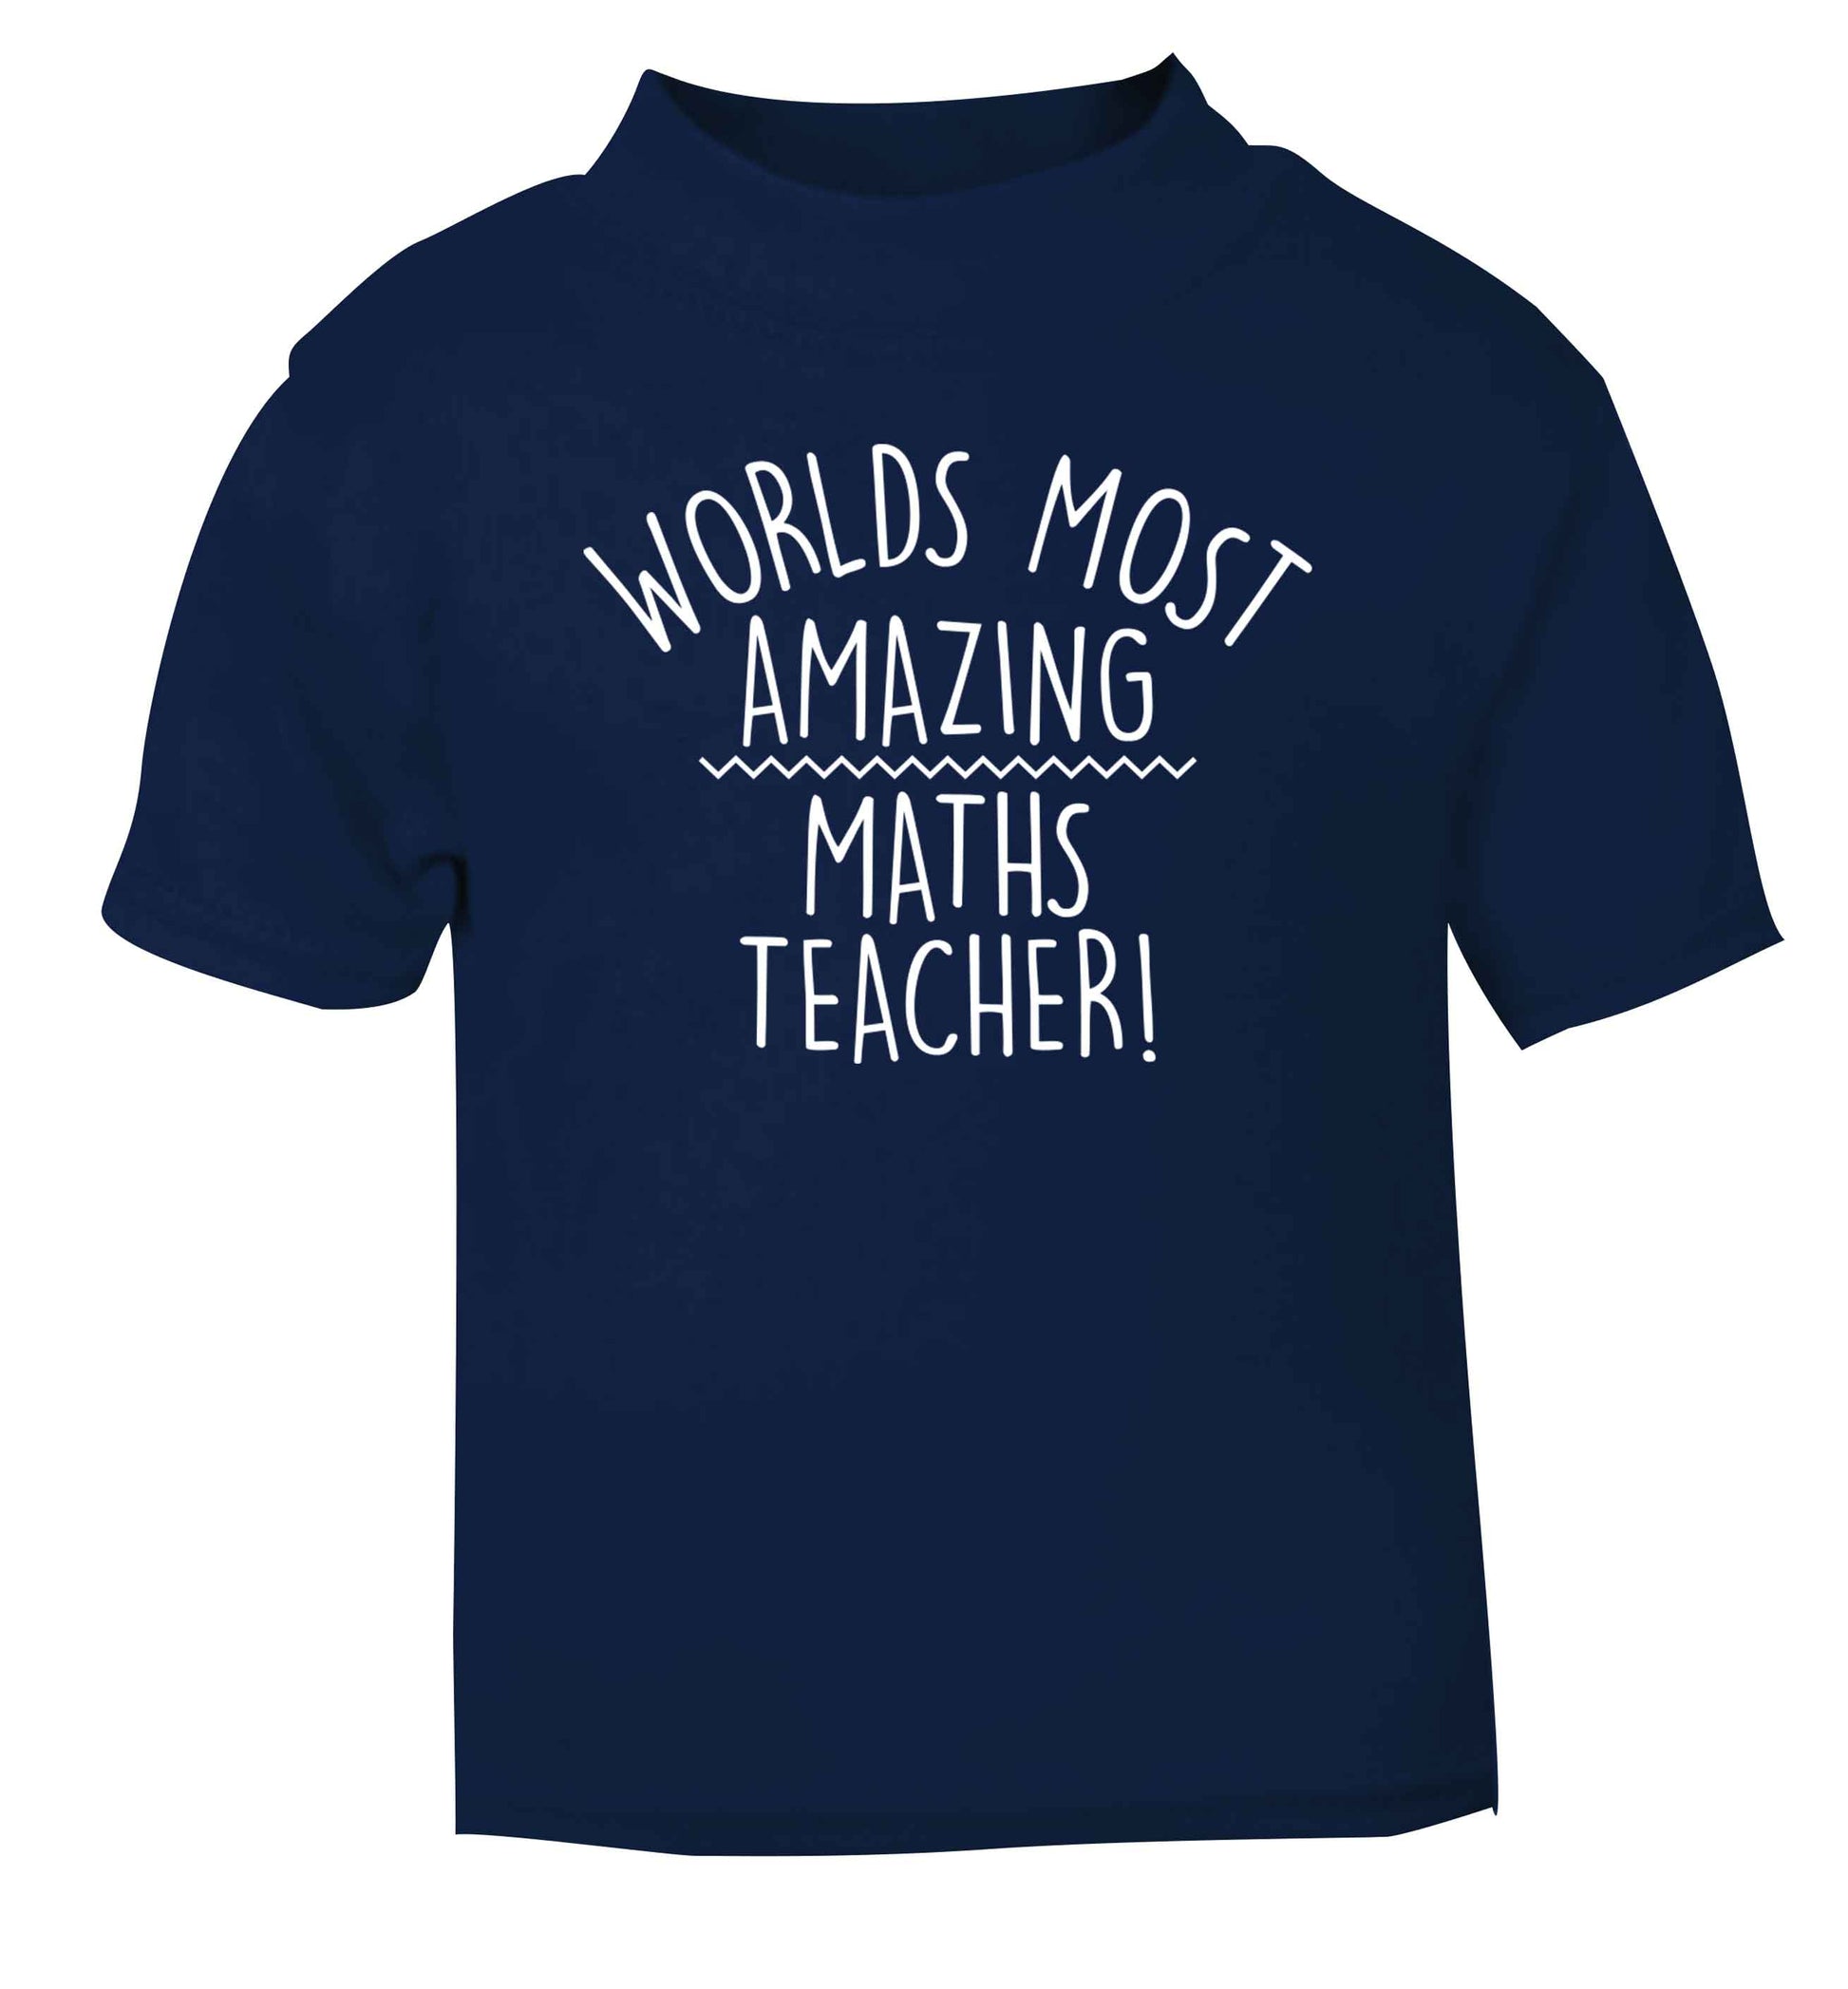 Worlds most amazing maths teacher navy baby toddler Tshirt 2 Years